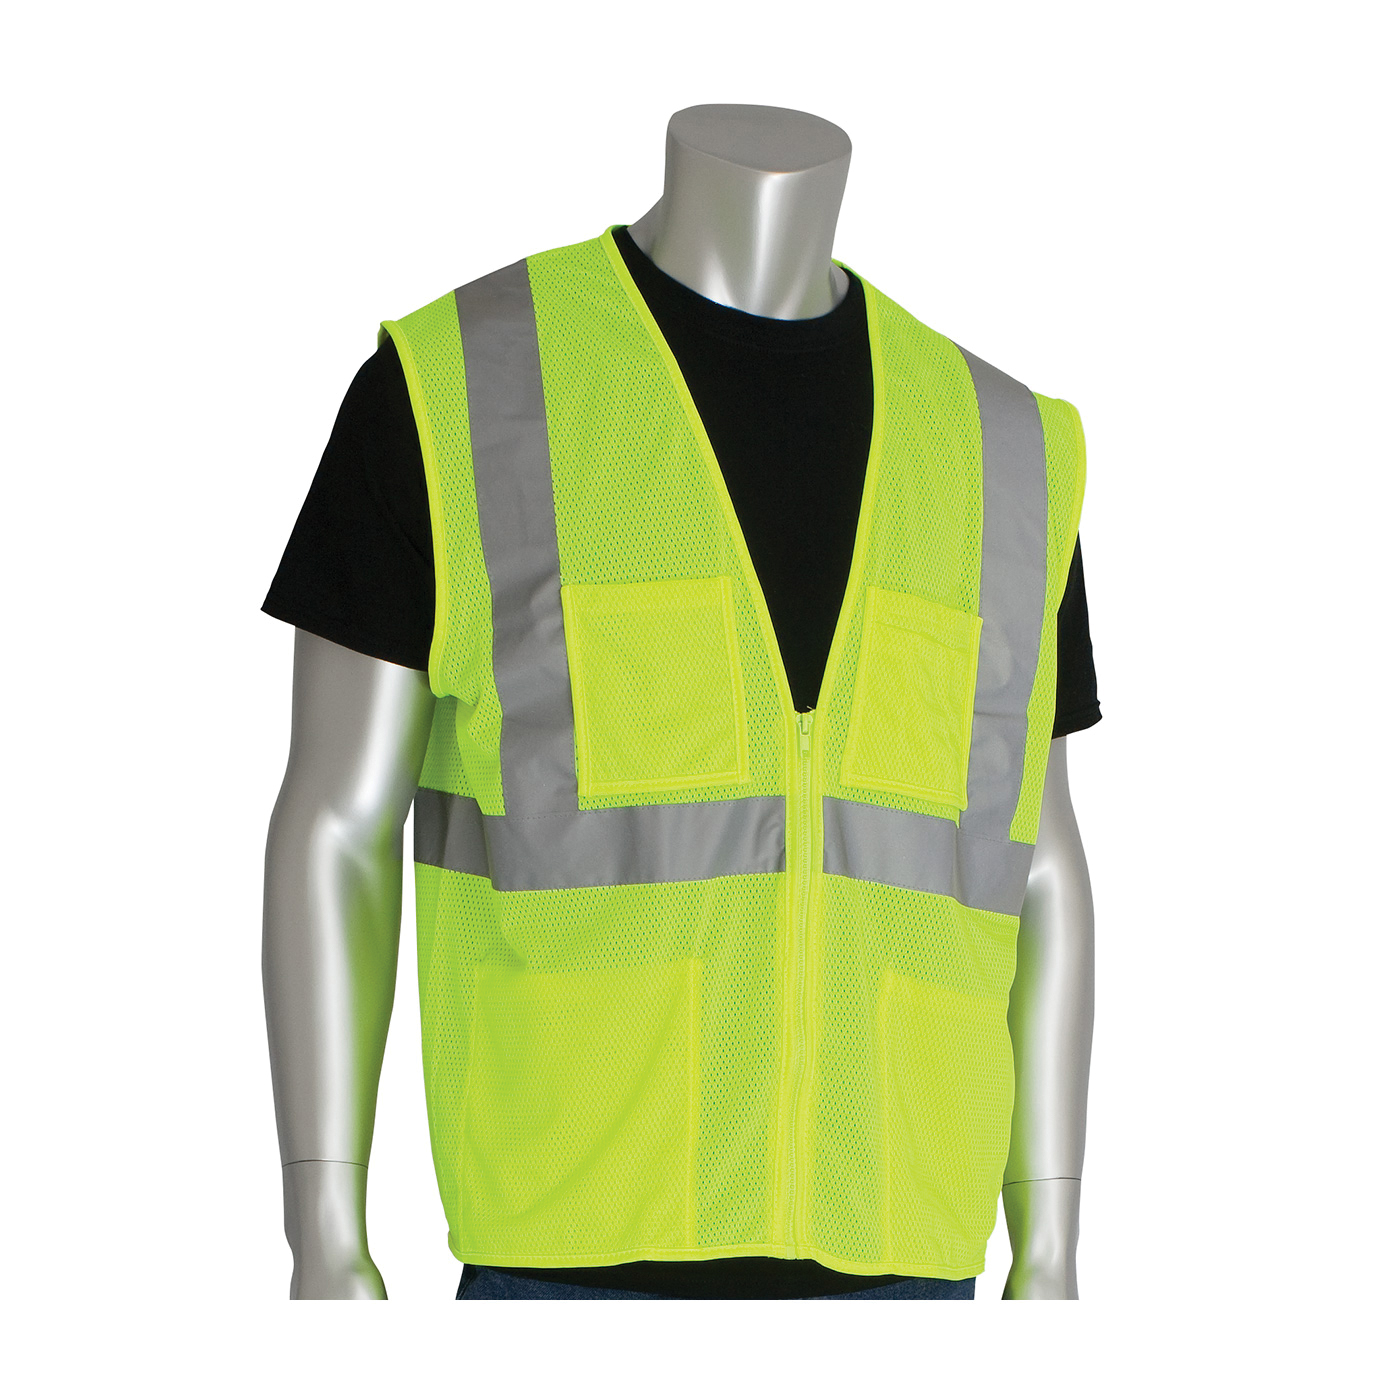 PIP® 302-MVGZ4PLY-3X Safety Vest, 3XL, Hi-Viz Lime Yellow, Polyester Mesh, Zipper Closure, 4 Pockets, ANSI Class: Class 2, Specifications Met: ANSI 107 Type R